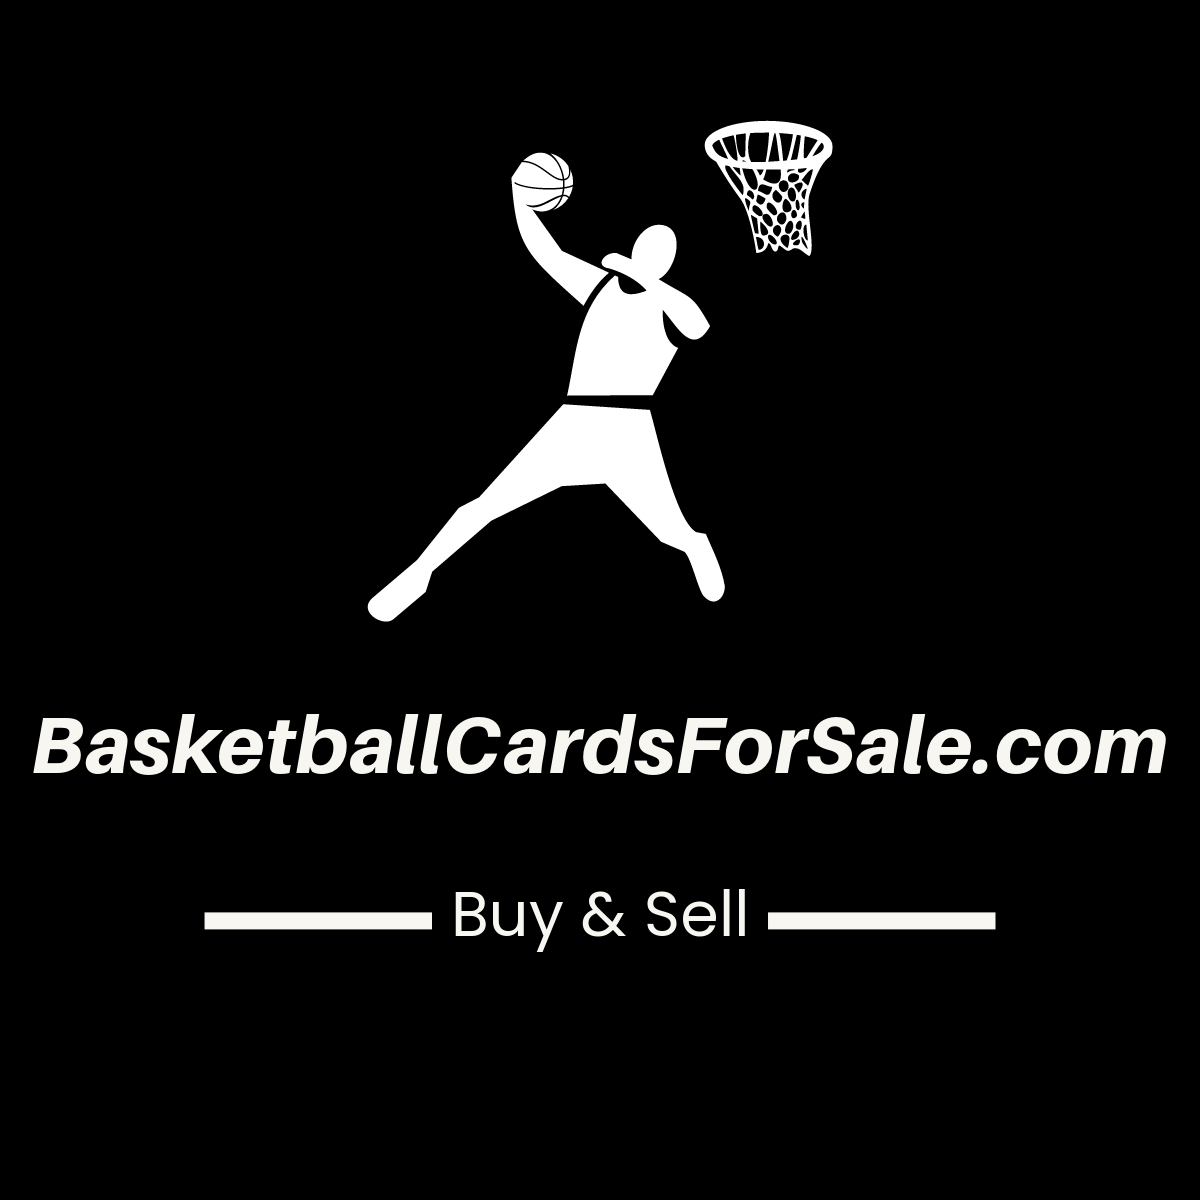 BasketballCardsForSale.com